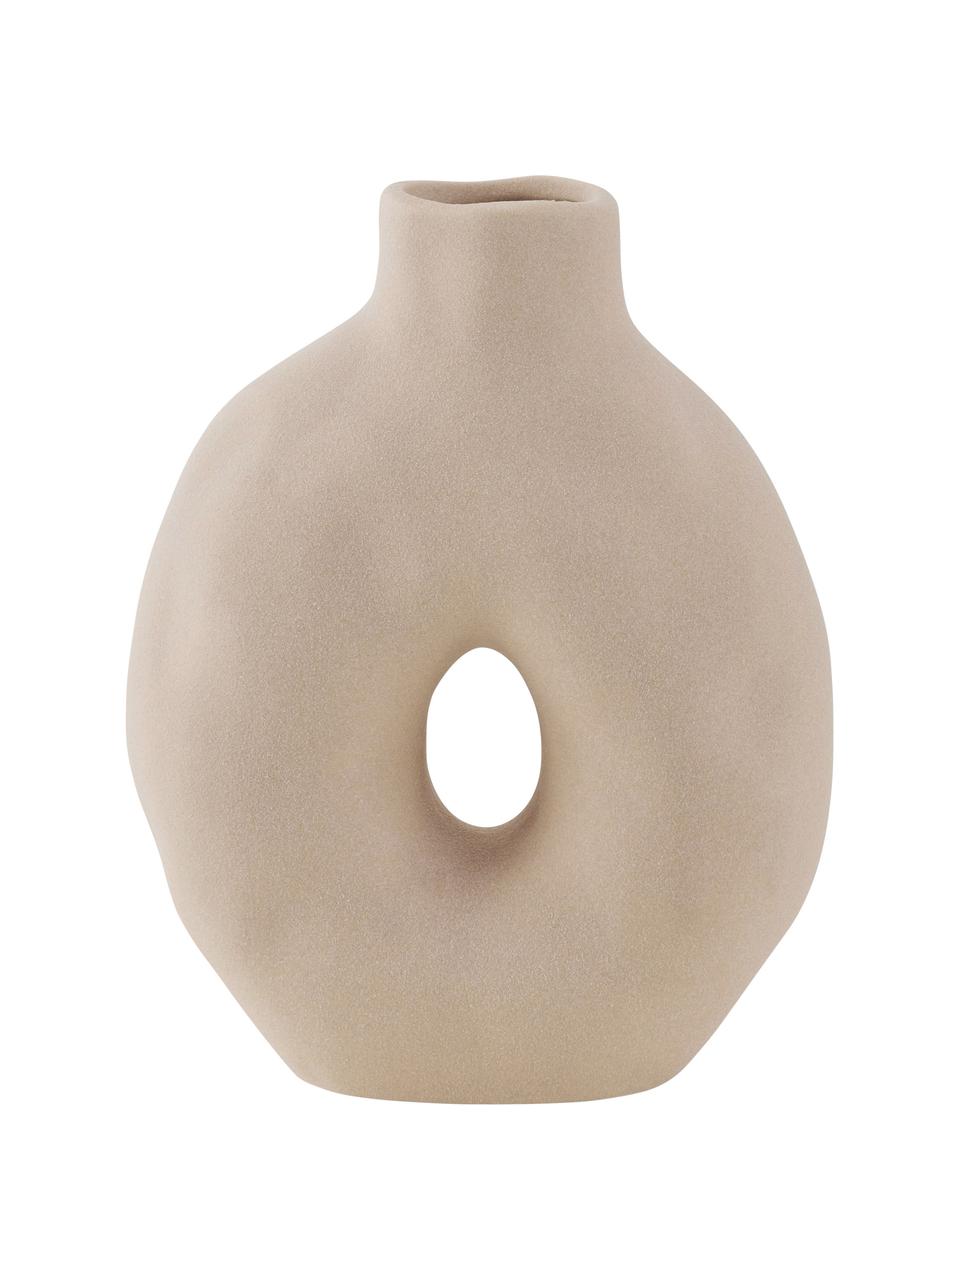 Vase porcelaine beige Oshape, Porcelaine, Beige, larg. 15 x haut. 20 cm